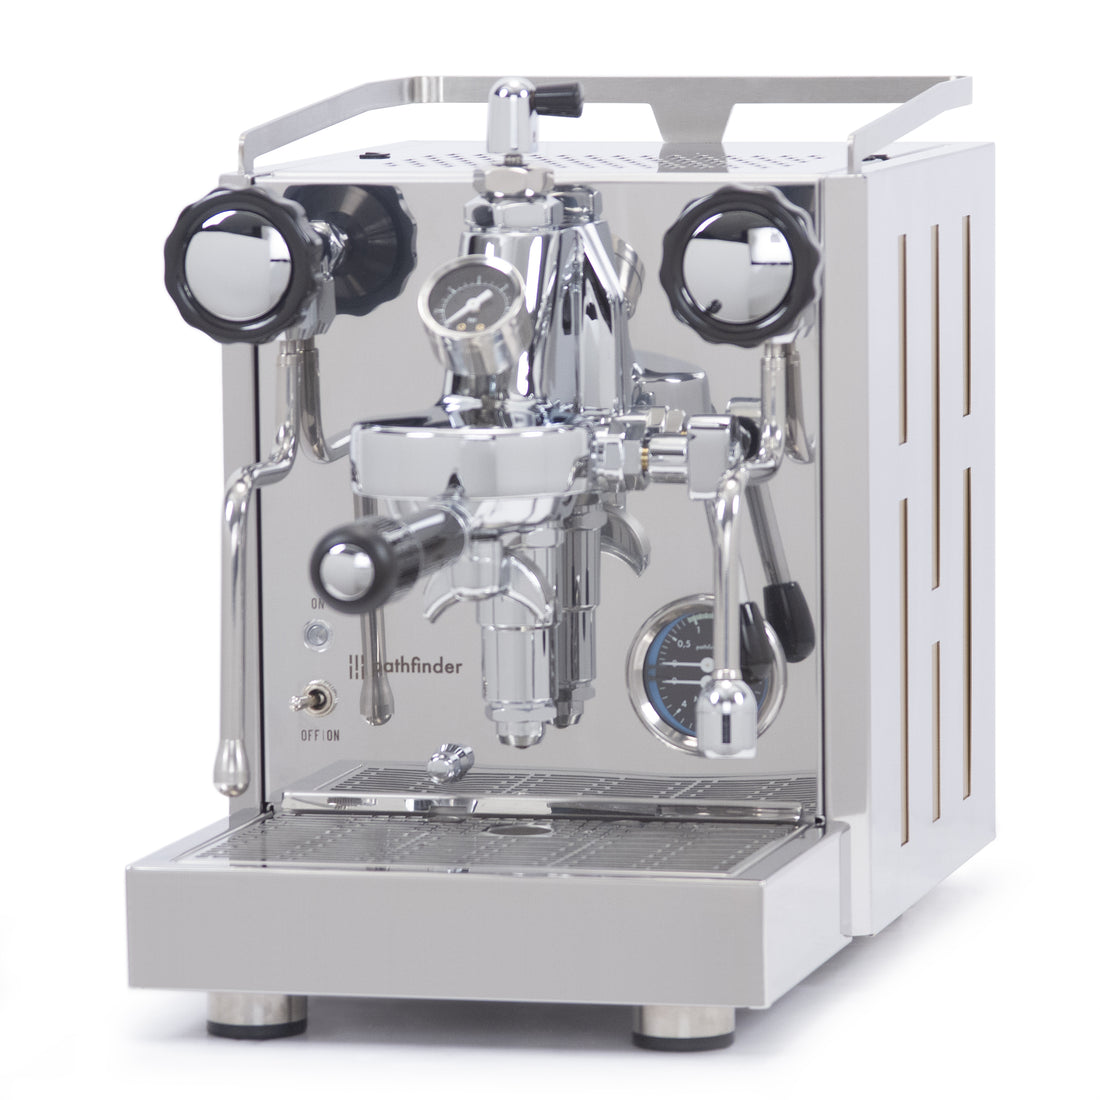 Pathfinder Heat Exchanger Espresso Machine with Flow Control - Gold Panels